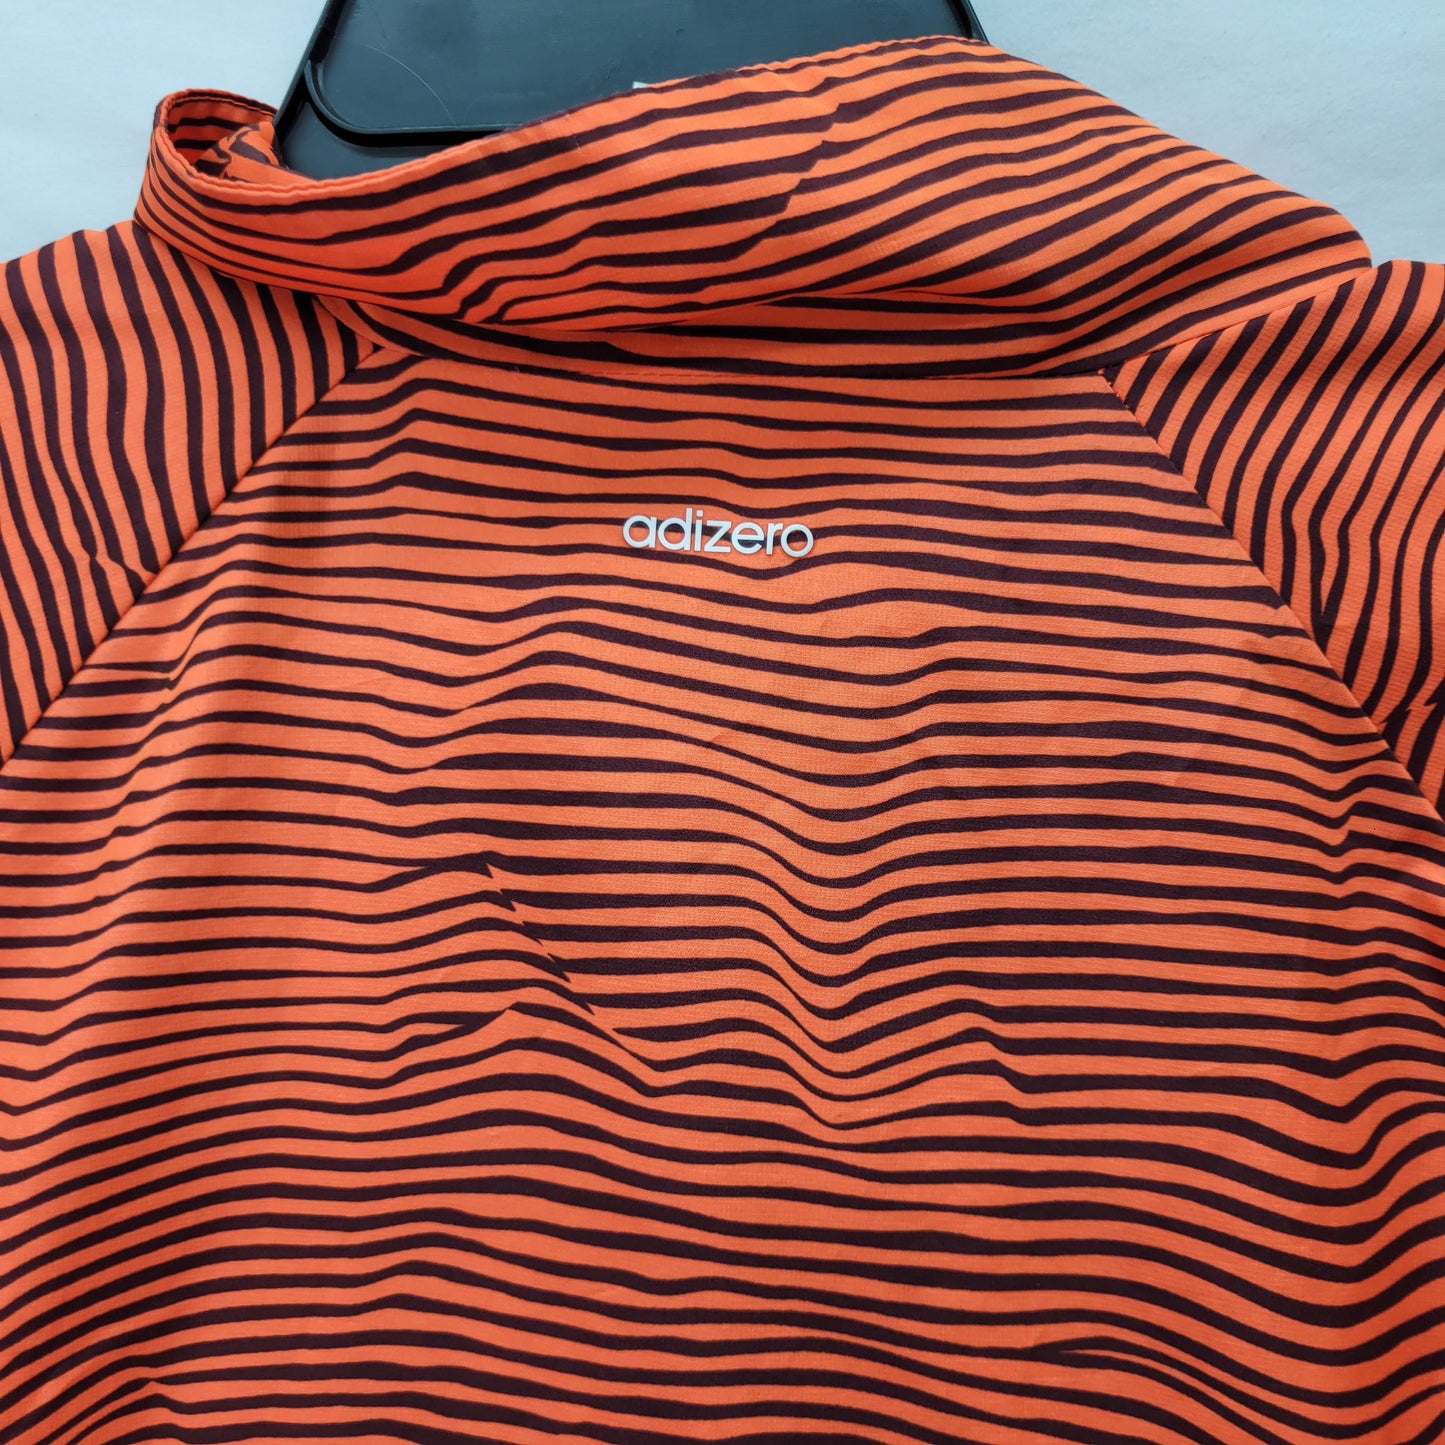 Adidas Men's Windbreaker Striped Orange/Black - Size Large